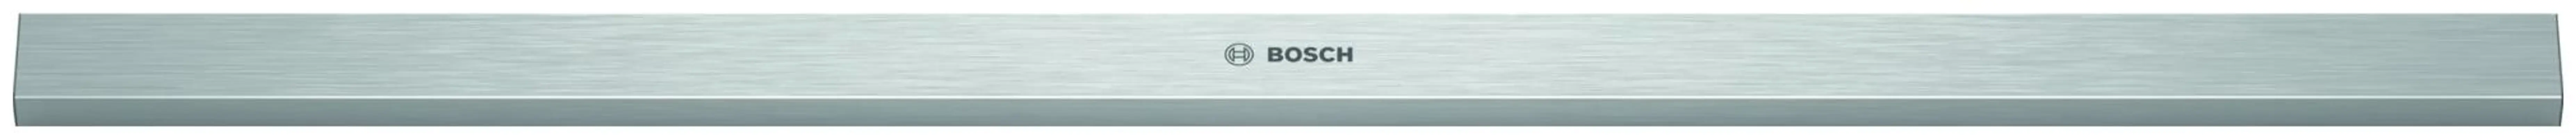 DSZ4985-Bosch-Afzuigkap-accessoires